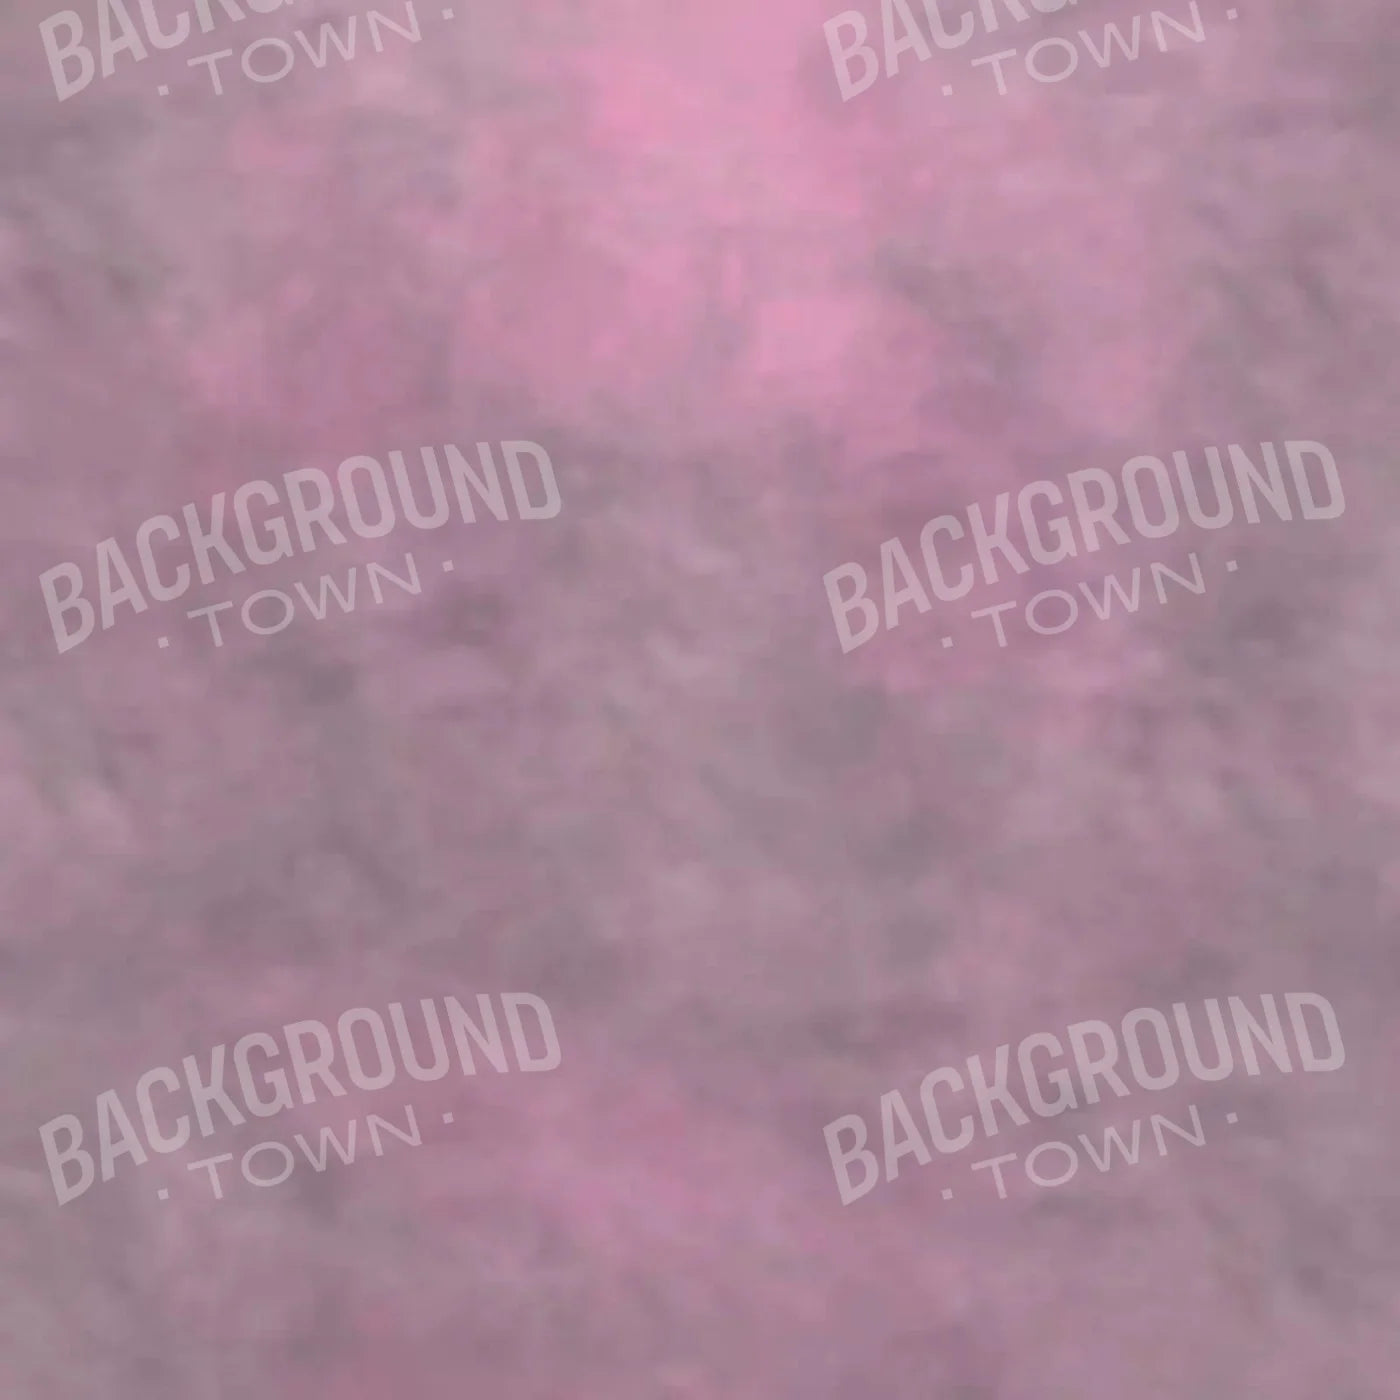 Cotton Candy 8X8 Fleece ( 96 X Inch ) Backdrop